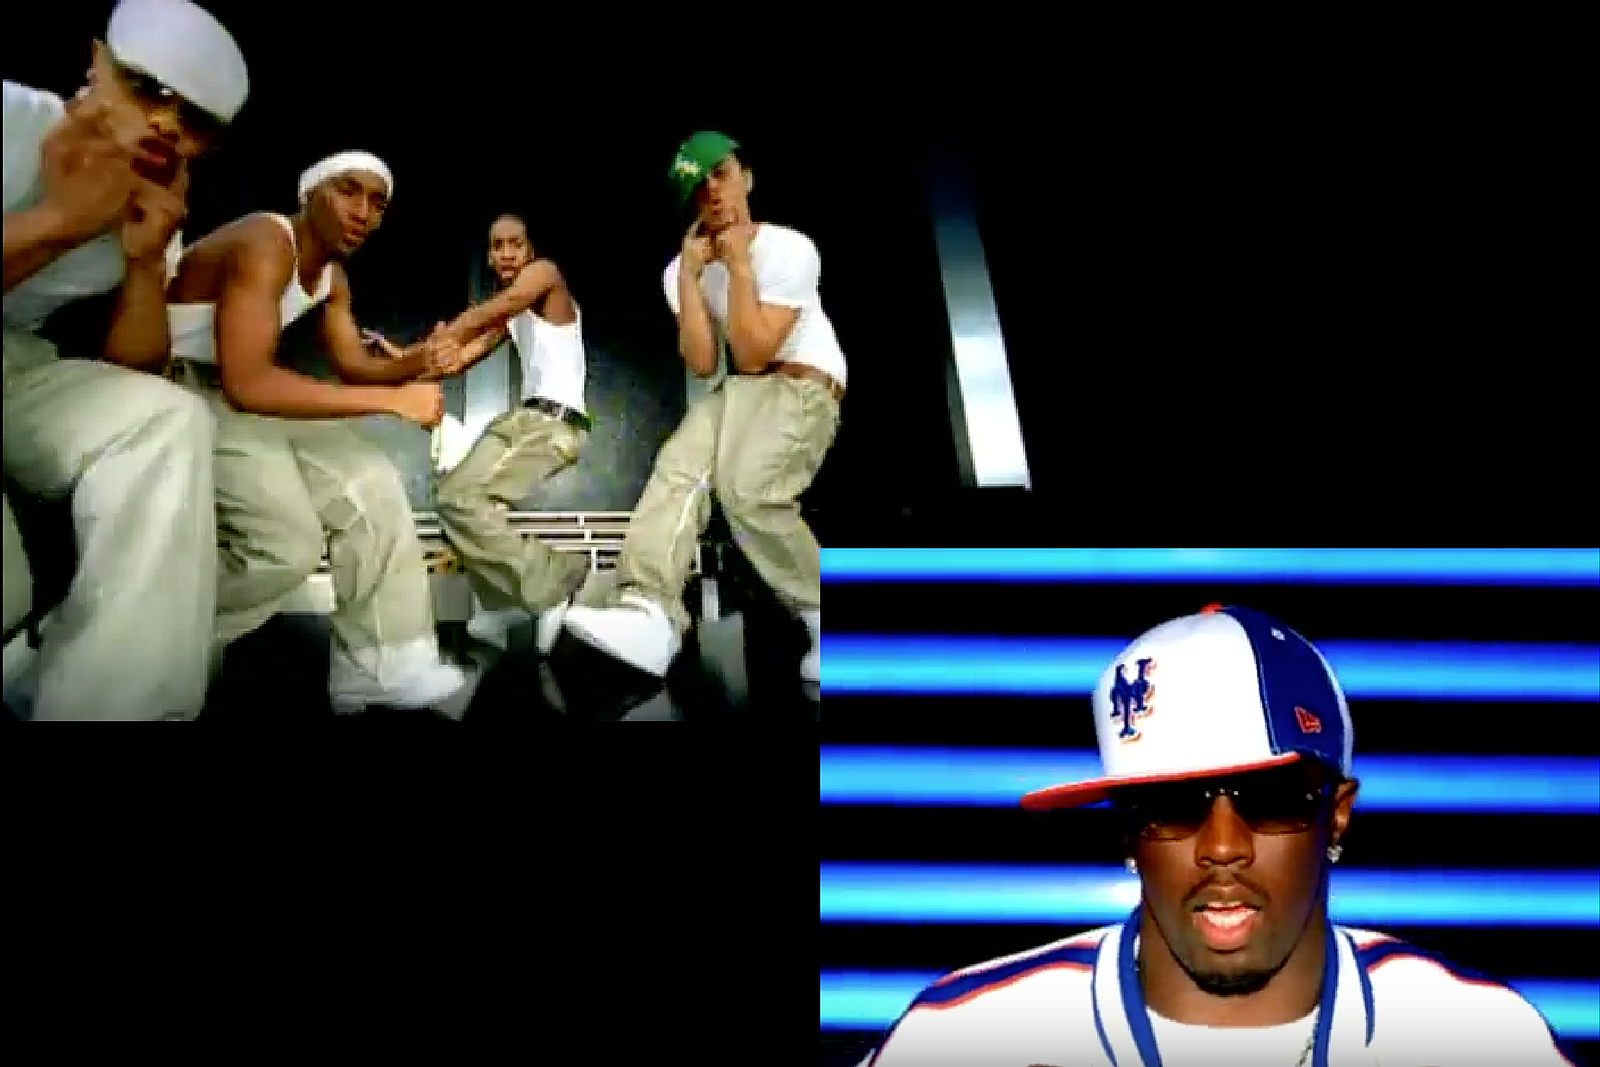 B2K, P. Diddy - Bump, Bump, Bump (Official Music Video) 